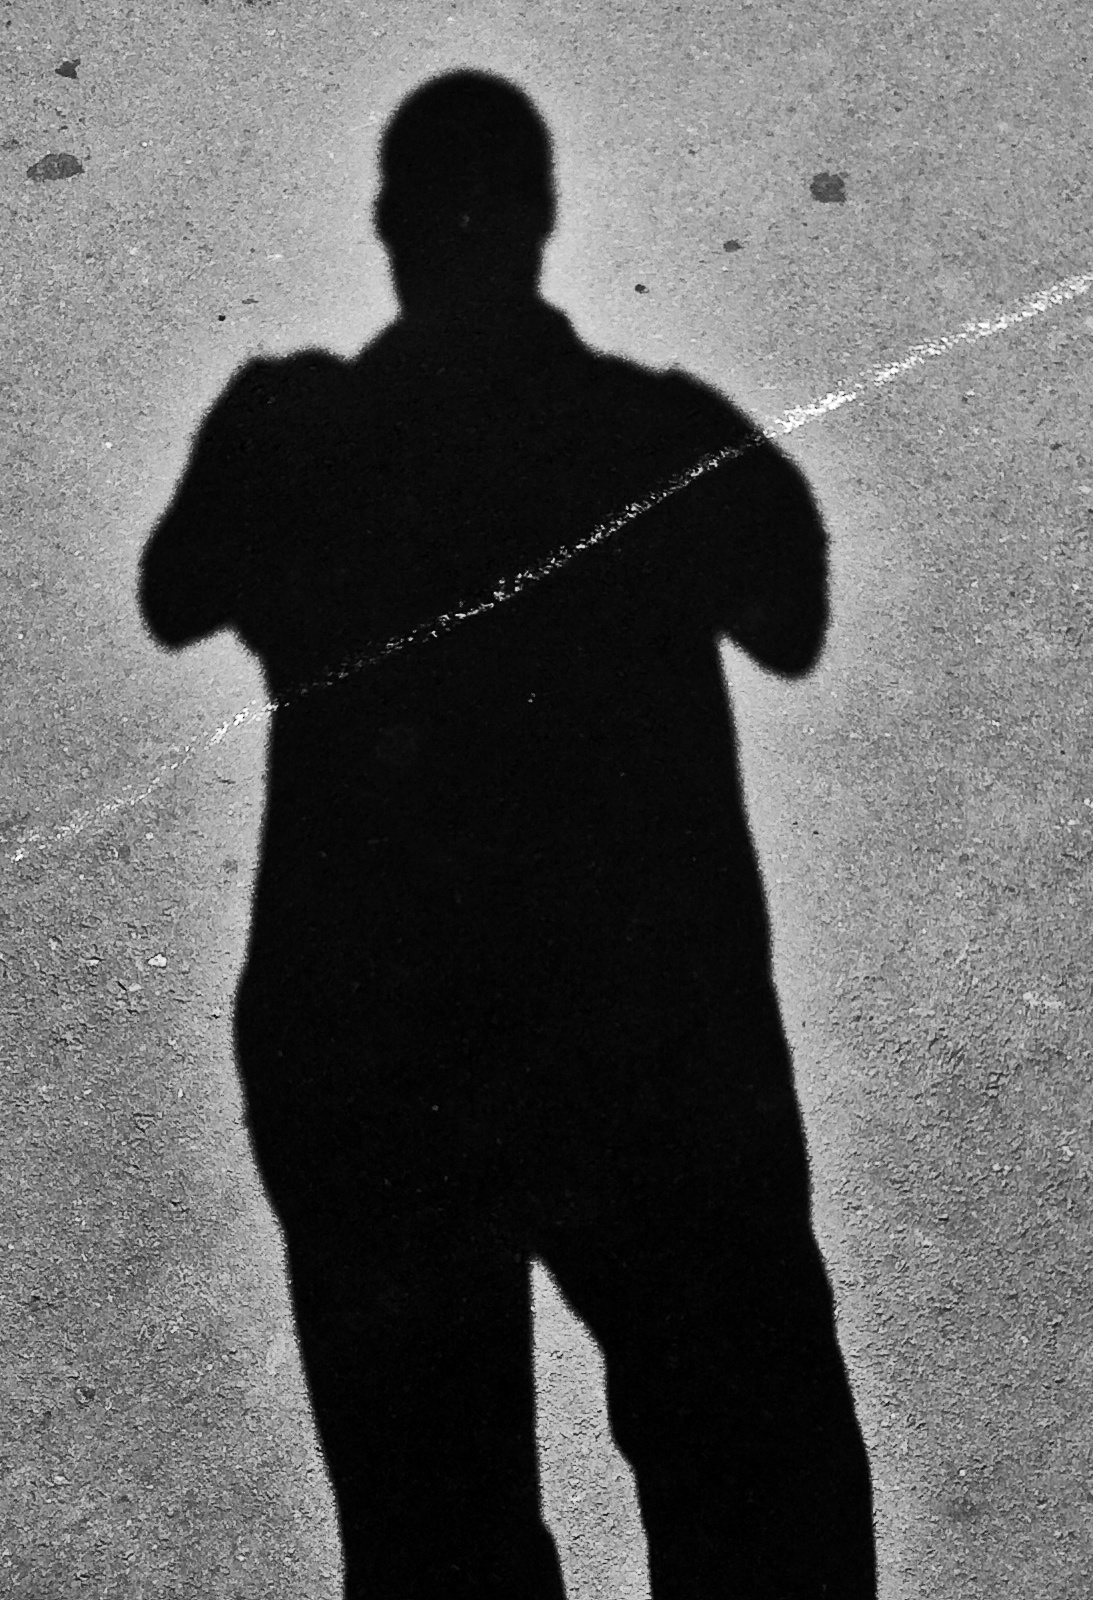 Shadow of a man